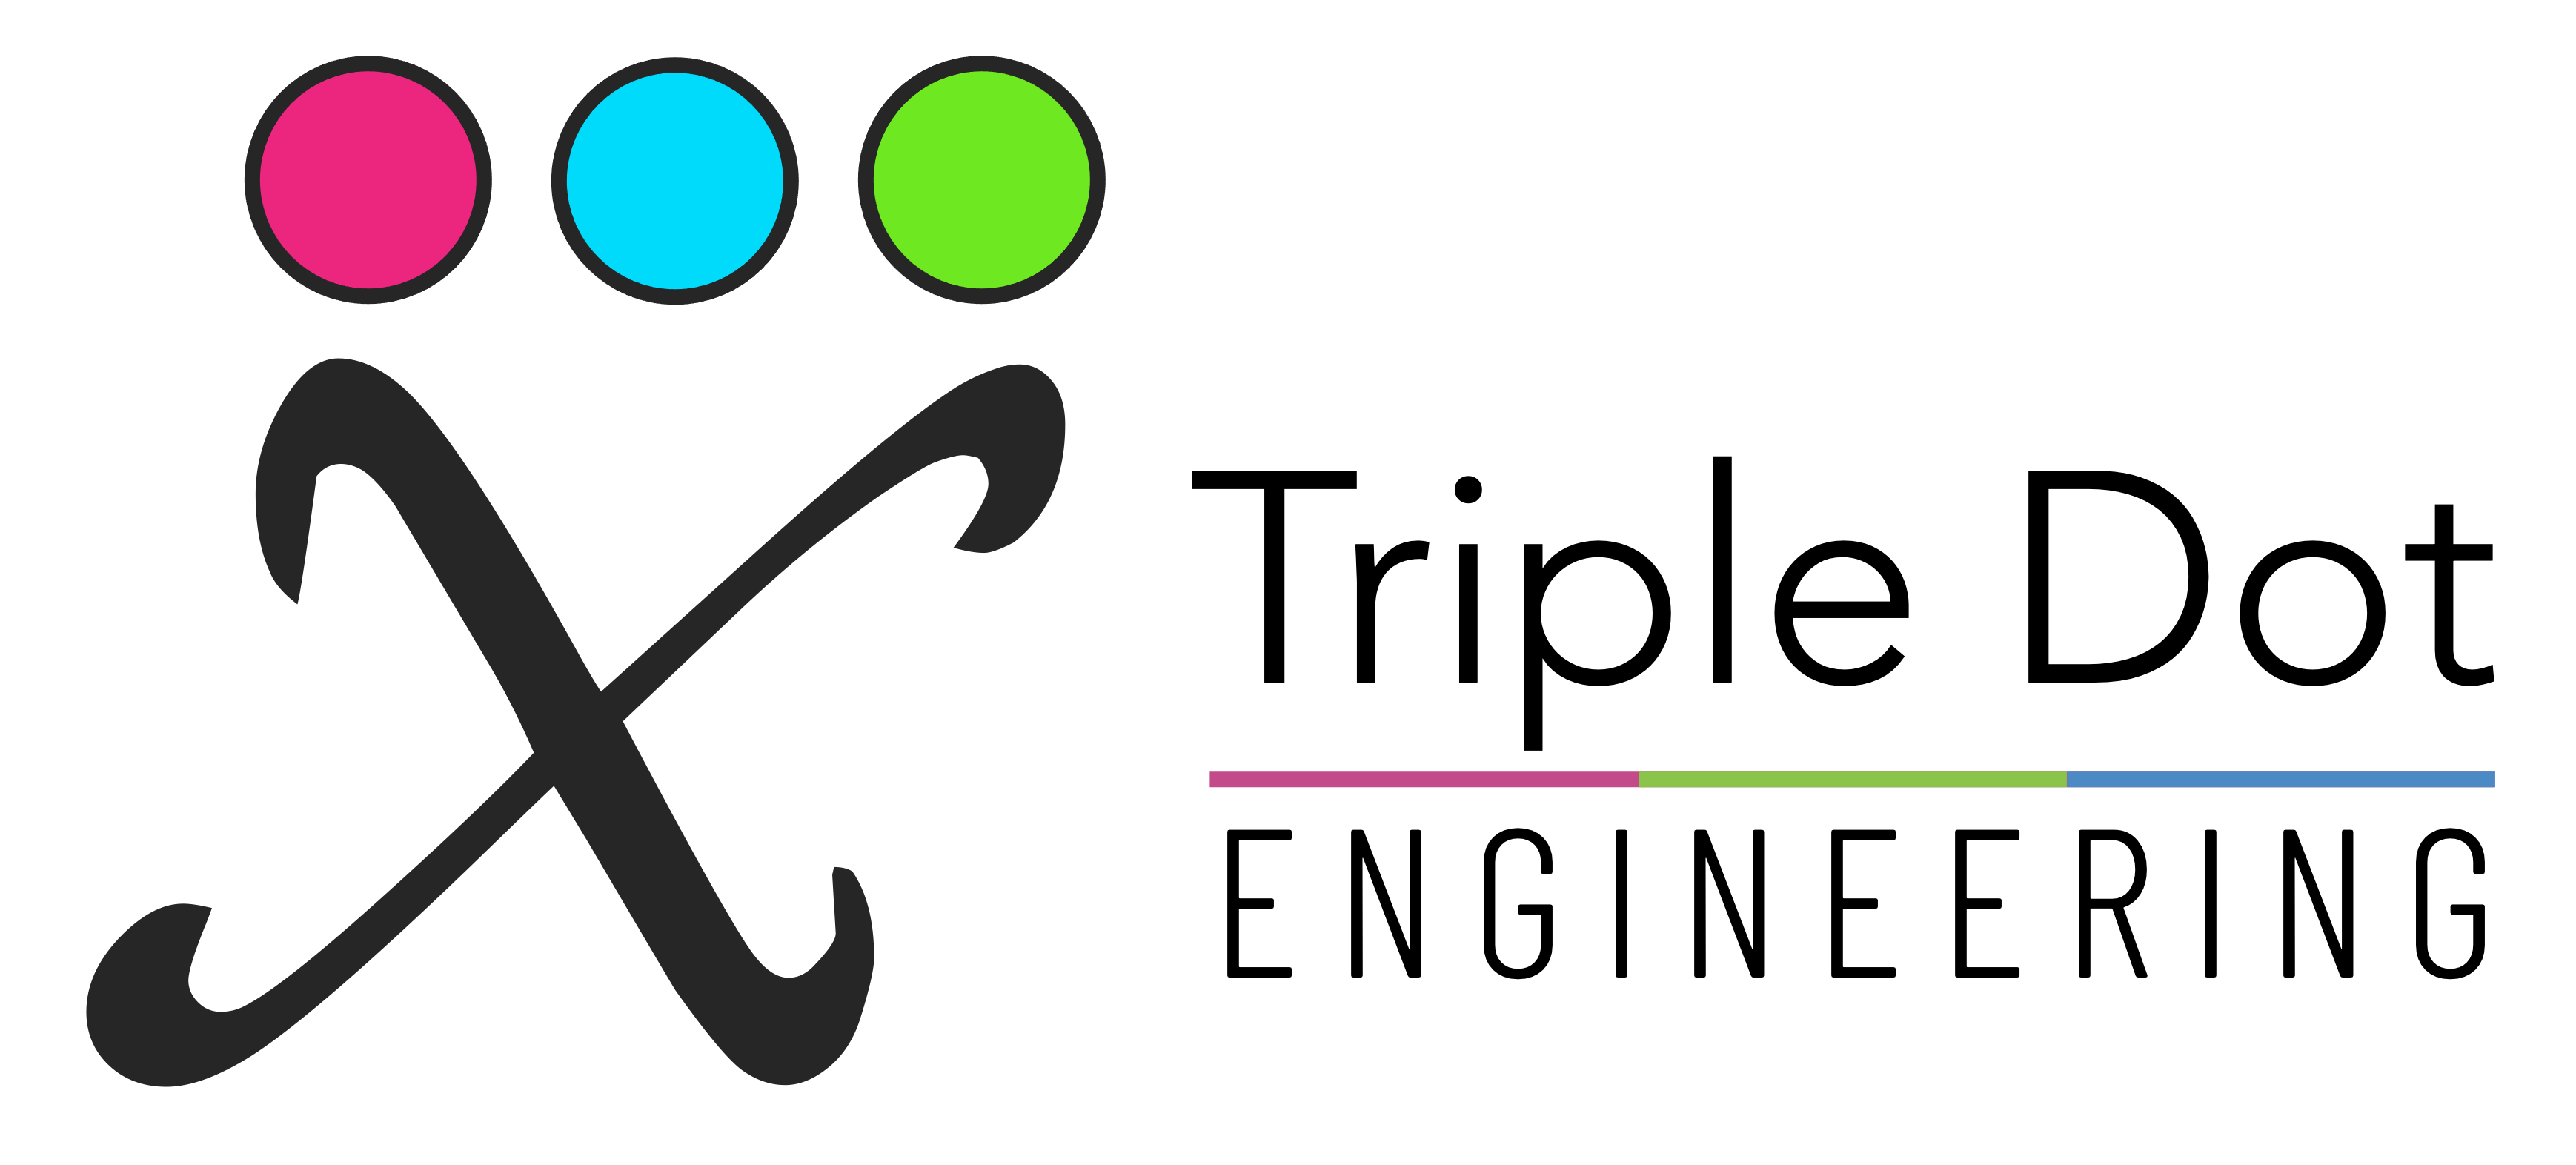 Triple Dot Engineering Logo